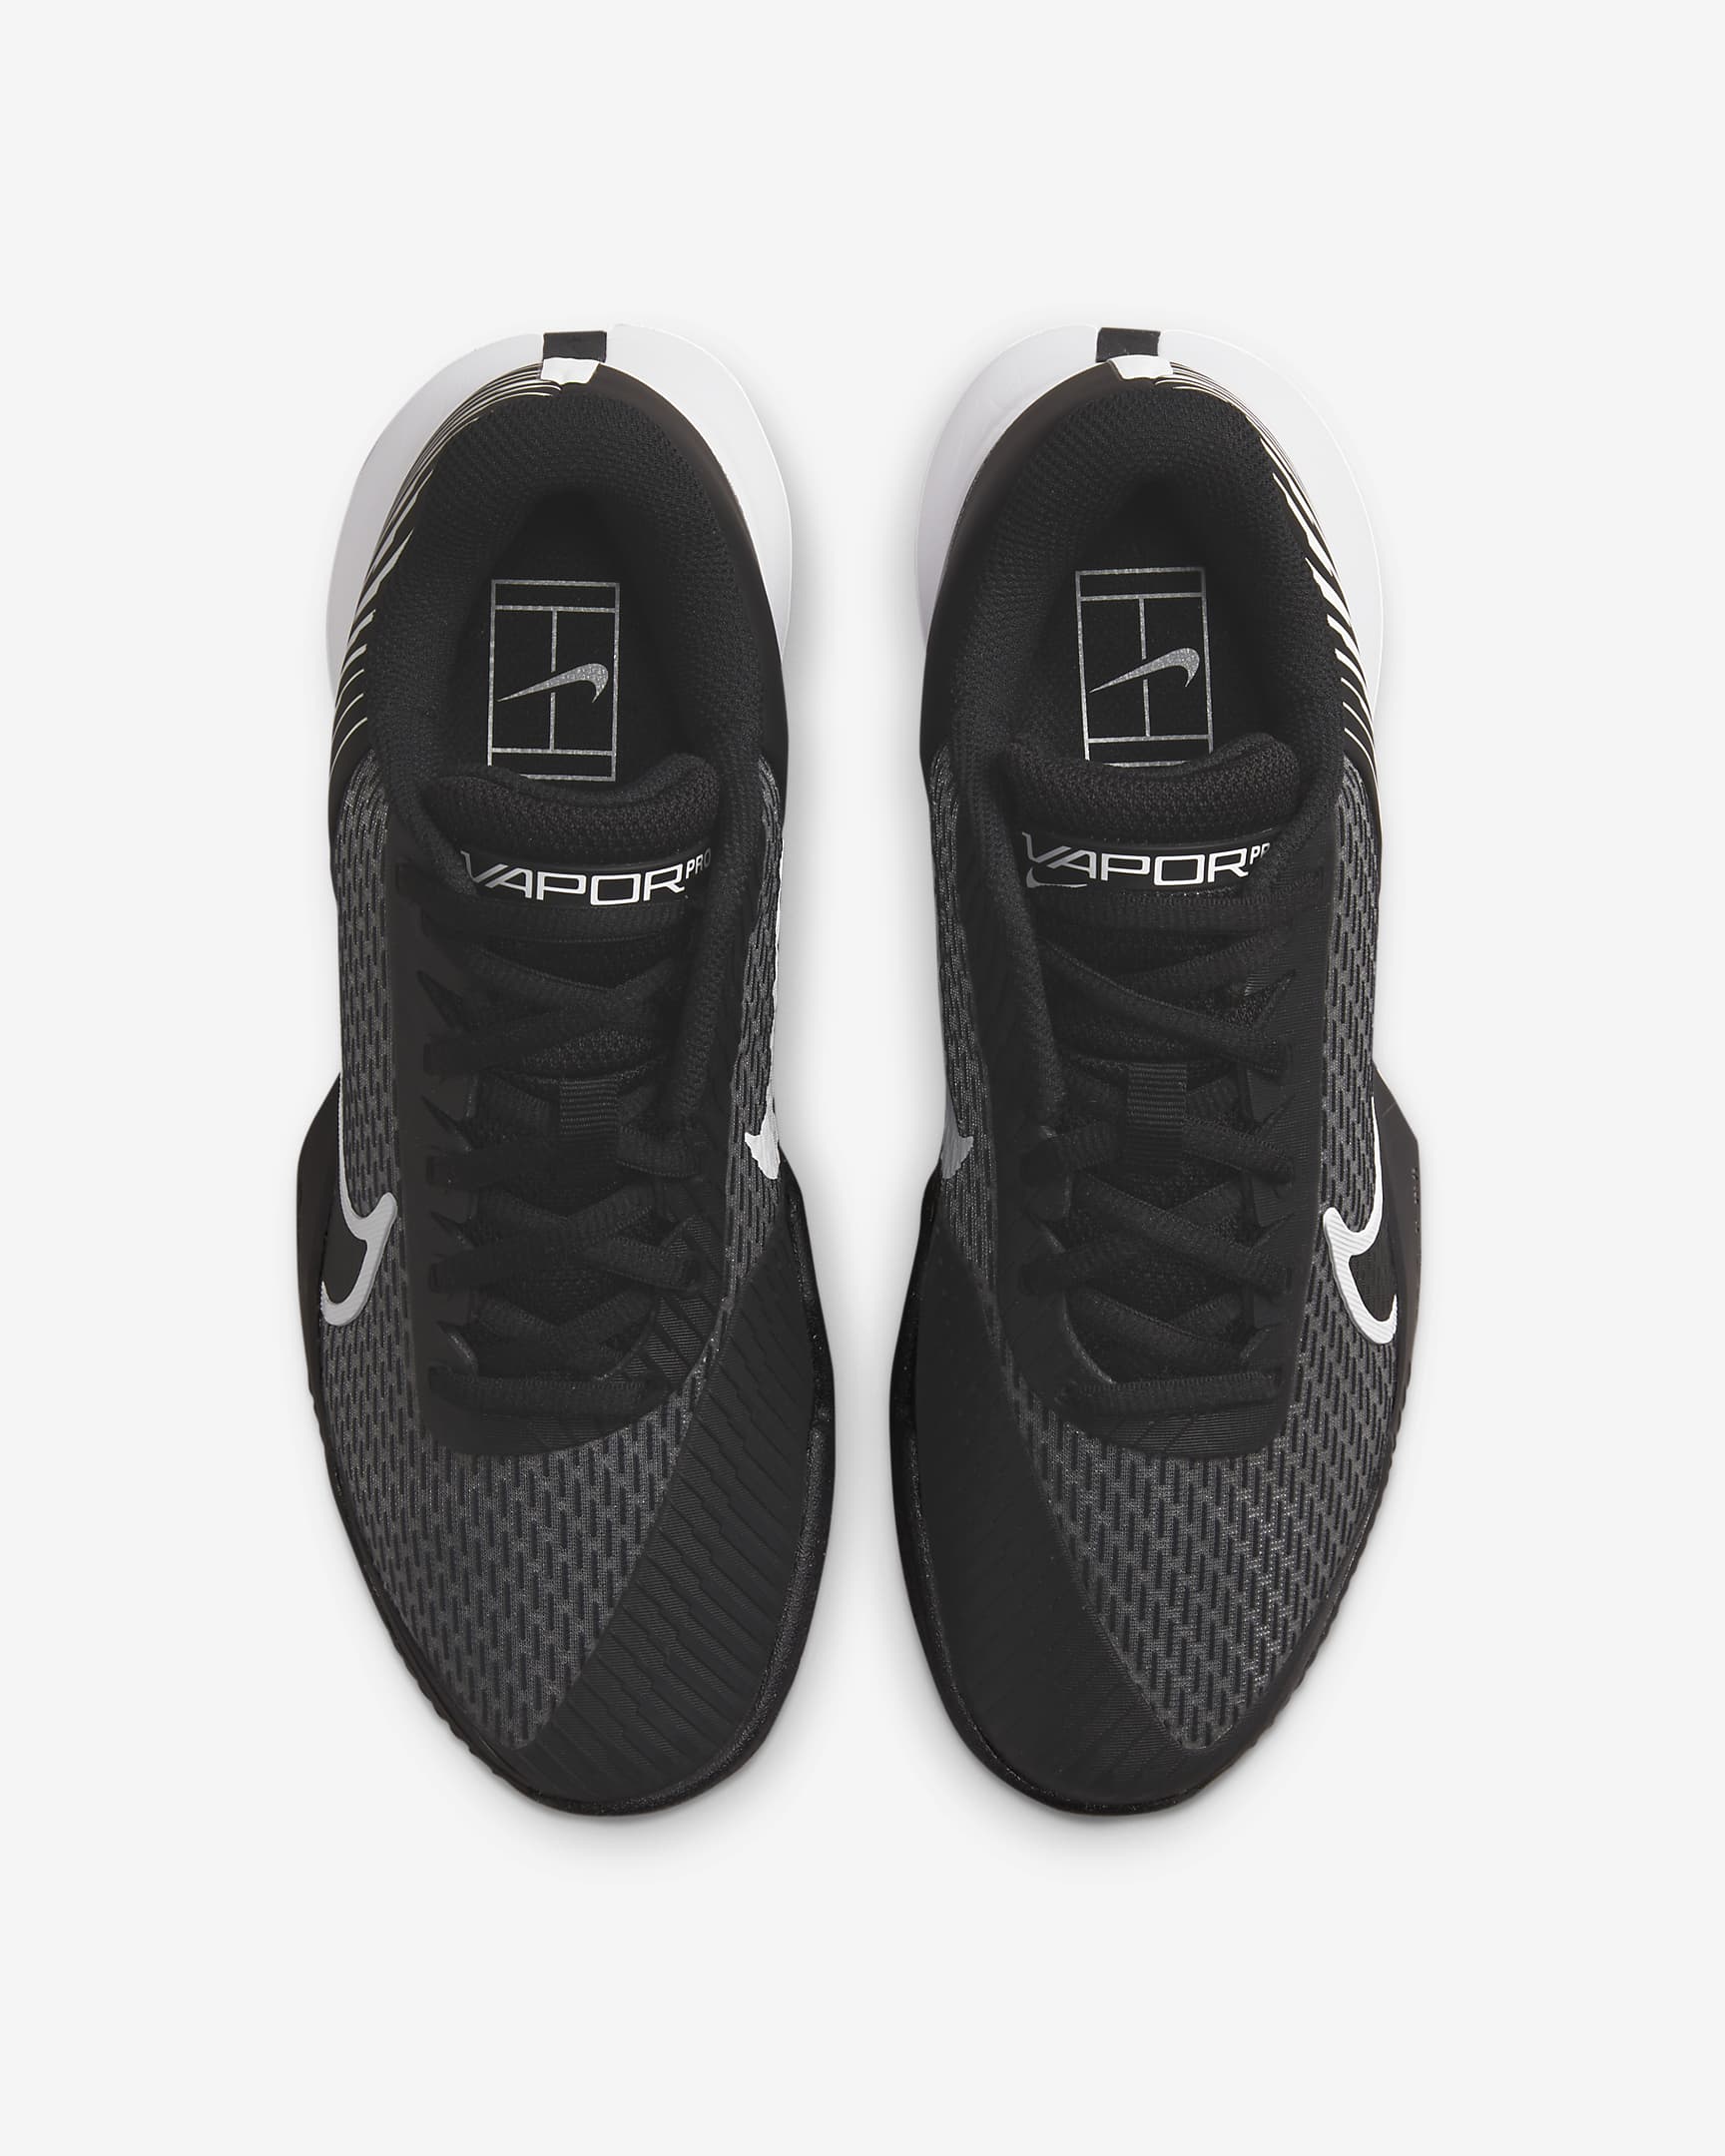 NikeCourt Air Zoom Vapor Pro 2 Women's Hard Court Tennis Shoes - Black/White